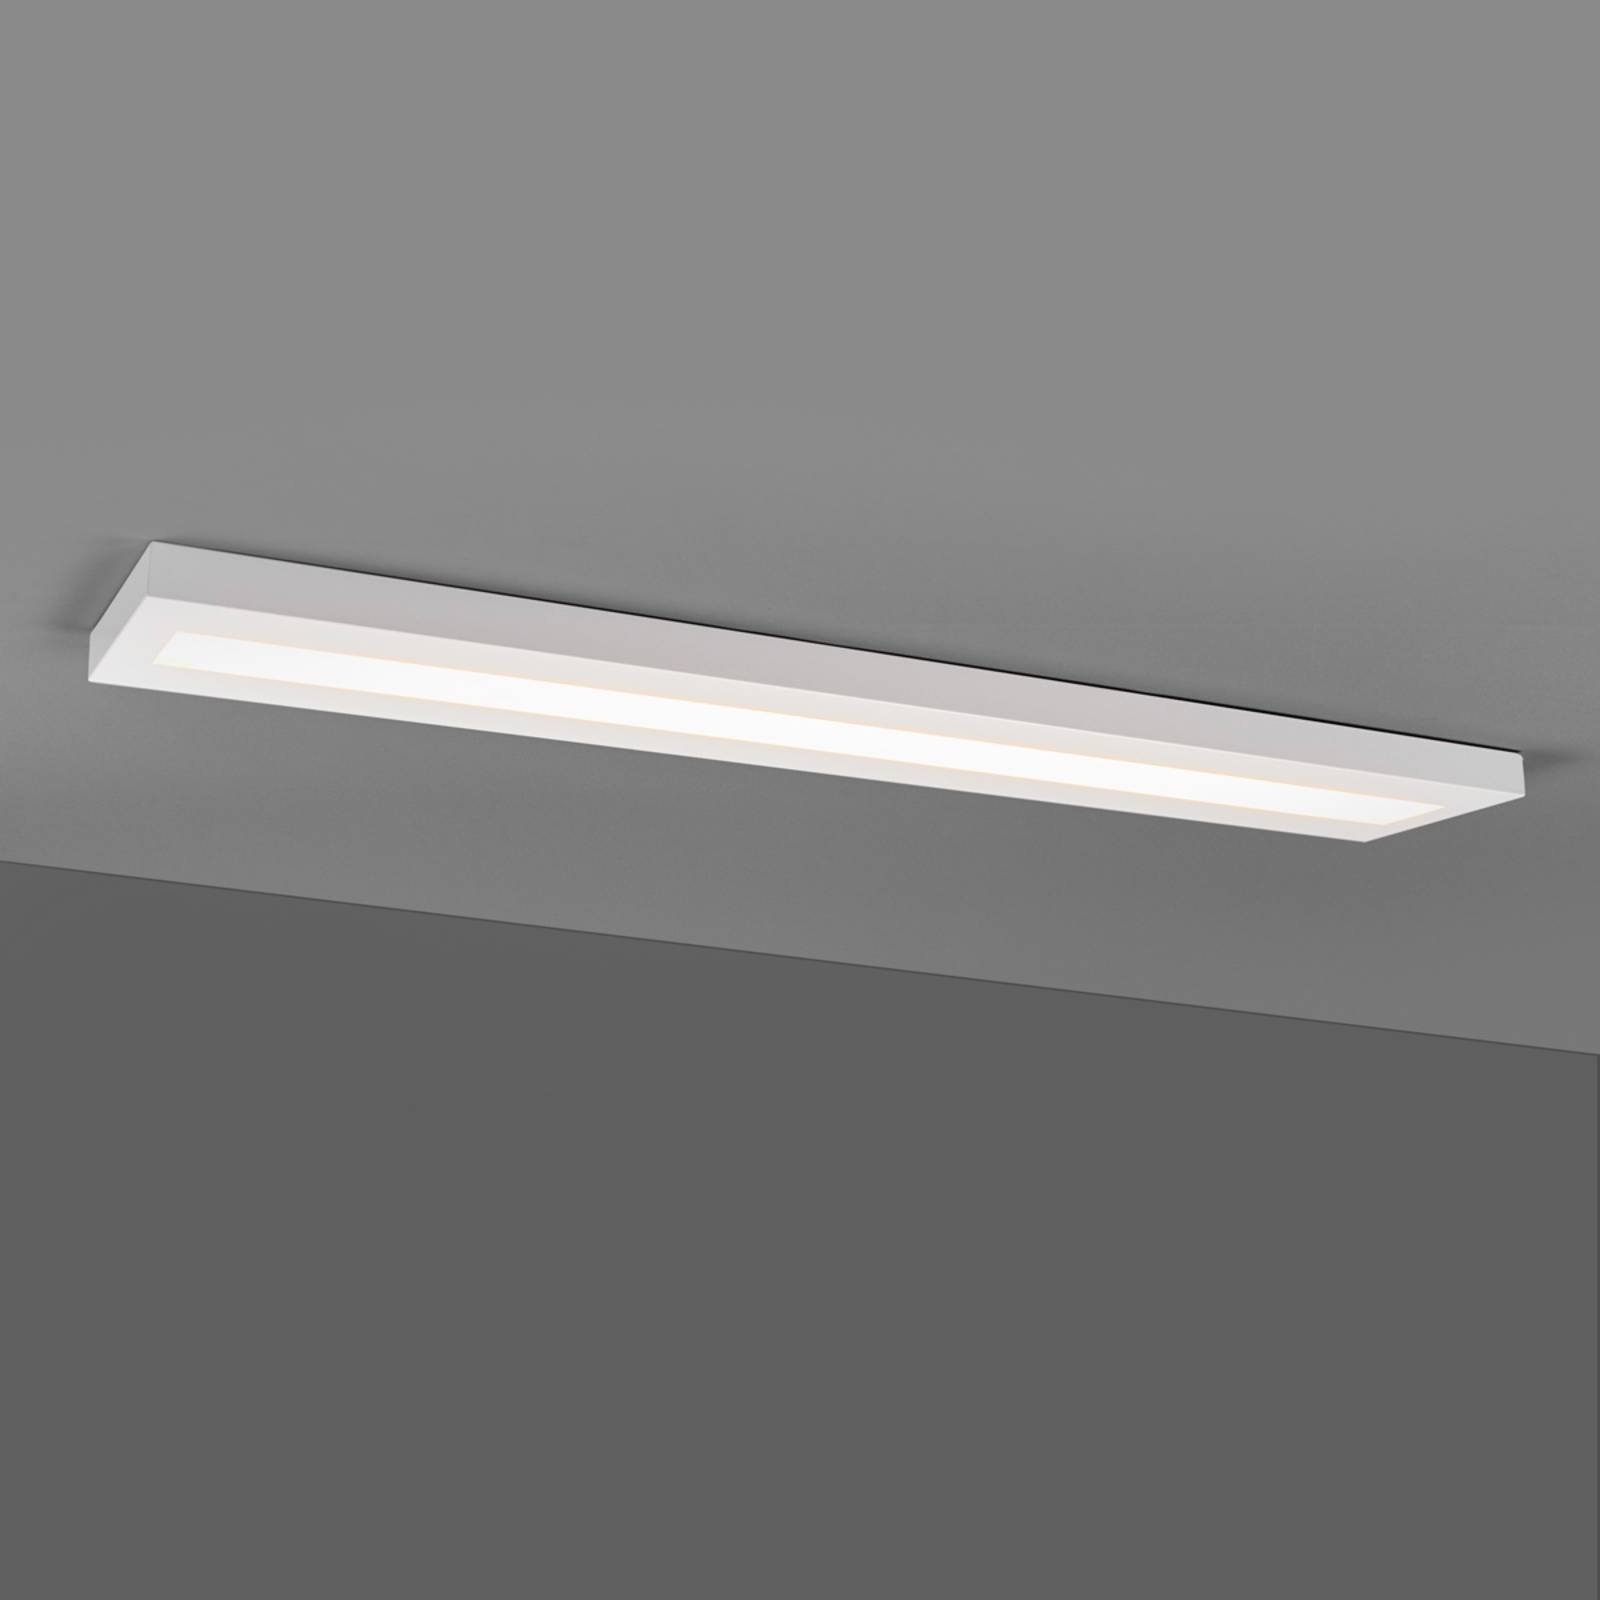 EGG Längliche LED-Anbauleuchte 120 cm weiß, BAP